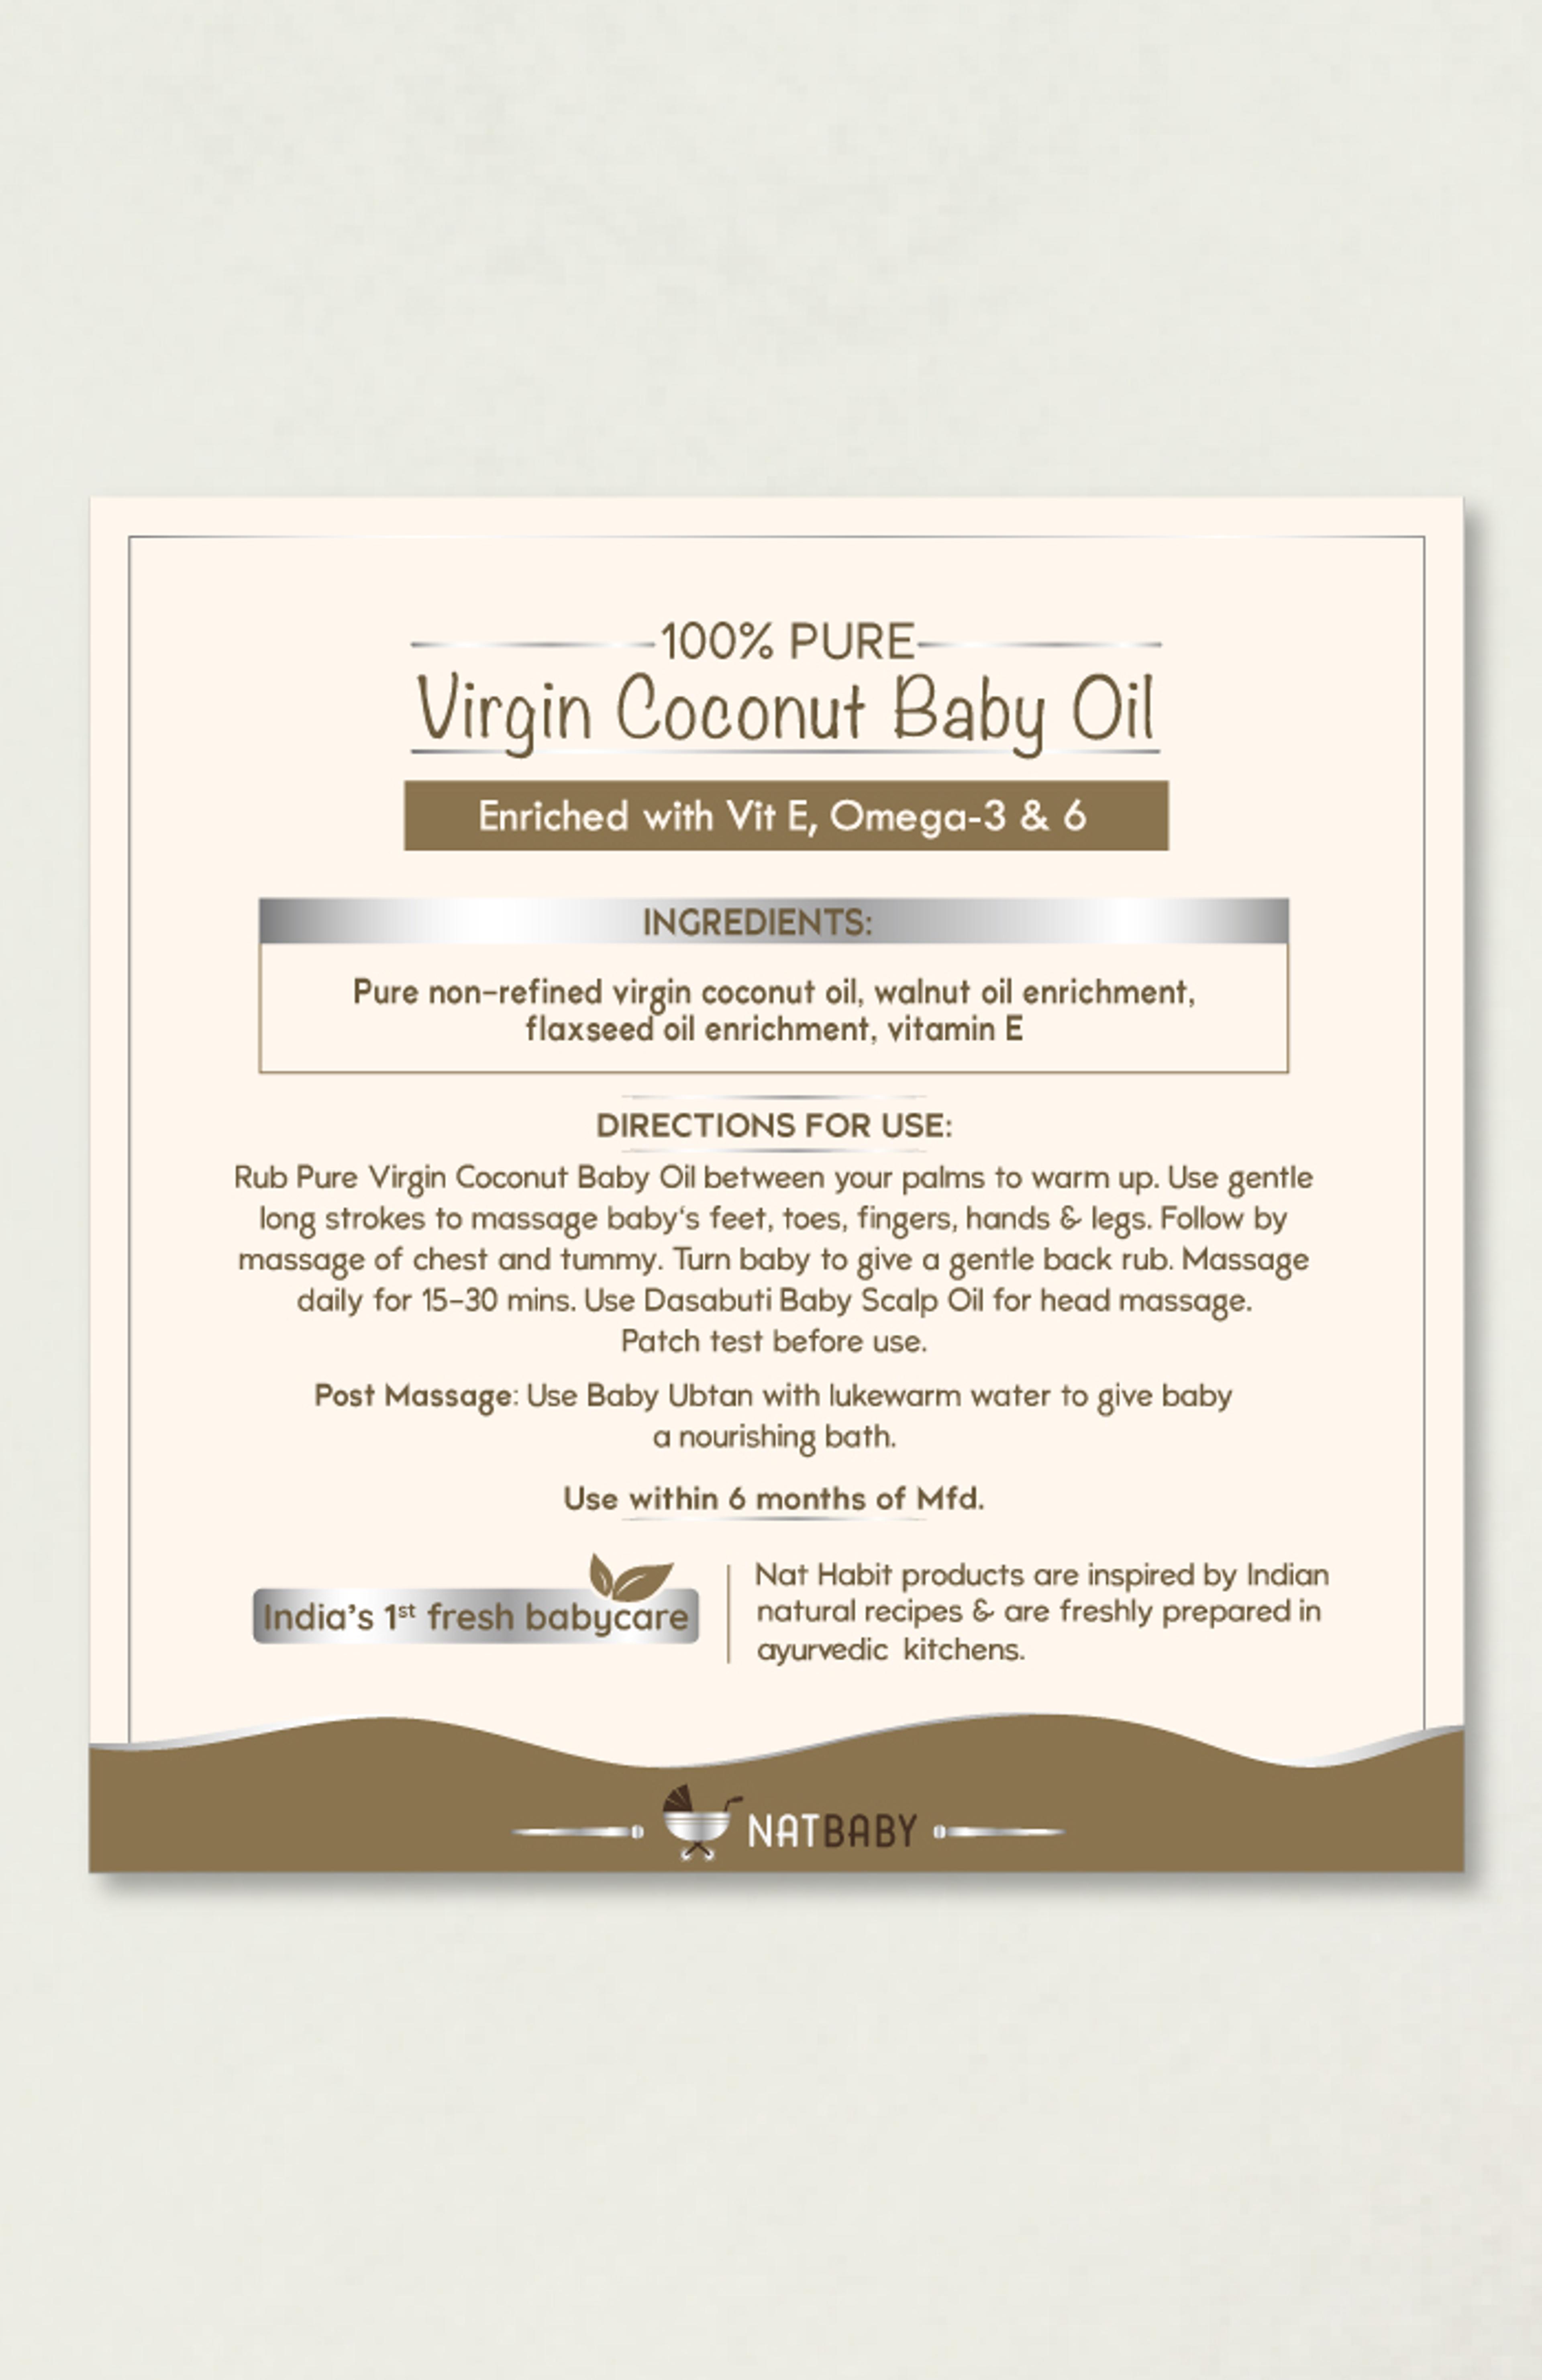 Virgin-Coconut-baby-oil-5